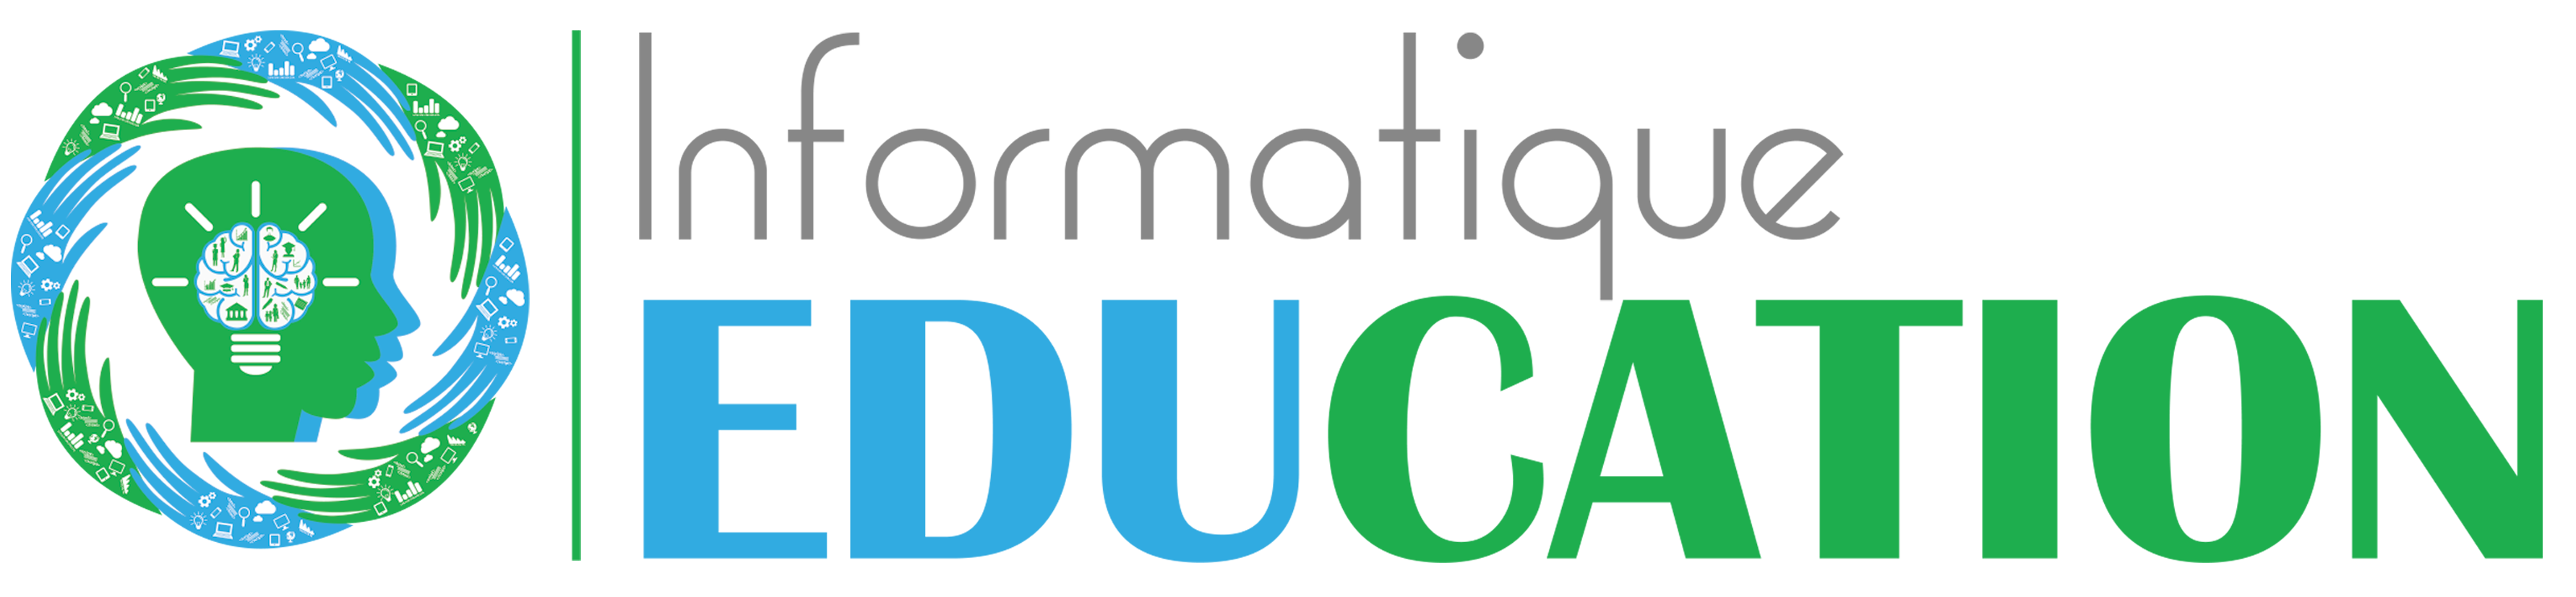 Informatique Education